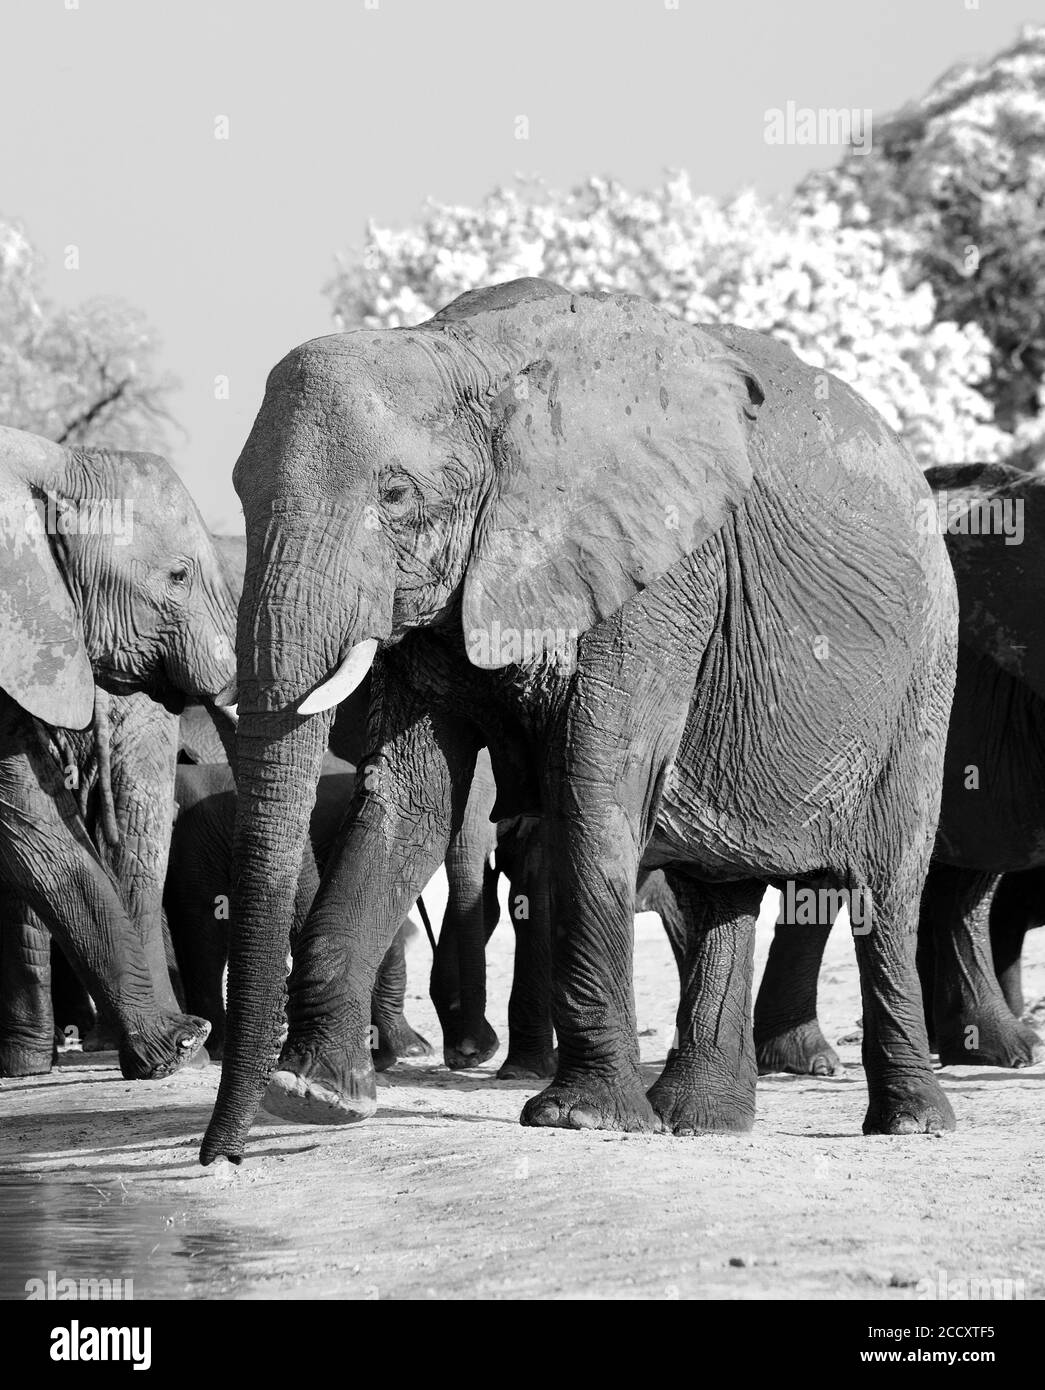 Immagine in bianco e nero di un grande elefante africano in una buca d'acqua nel Parco Nazionale di Hwange, Zimbabwe Foto Stock